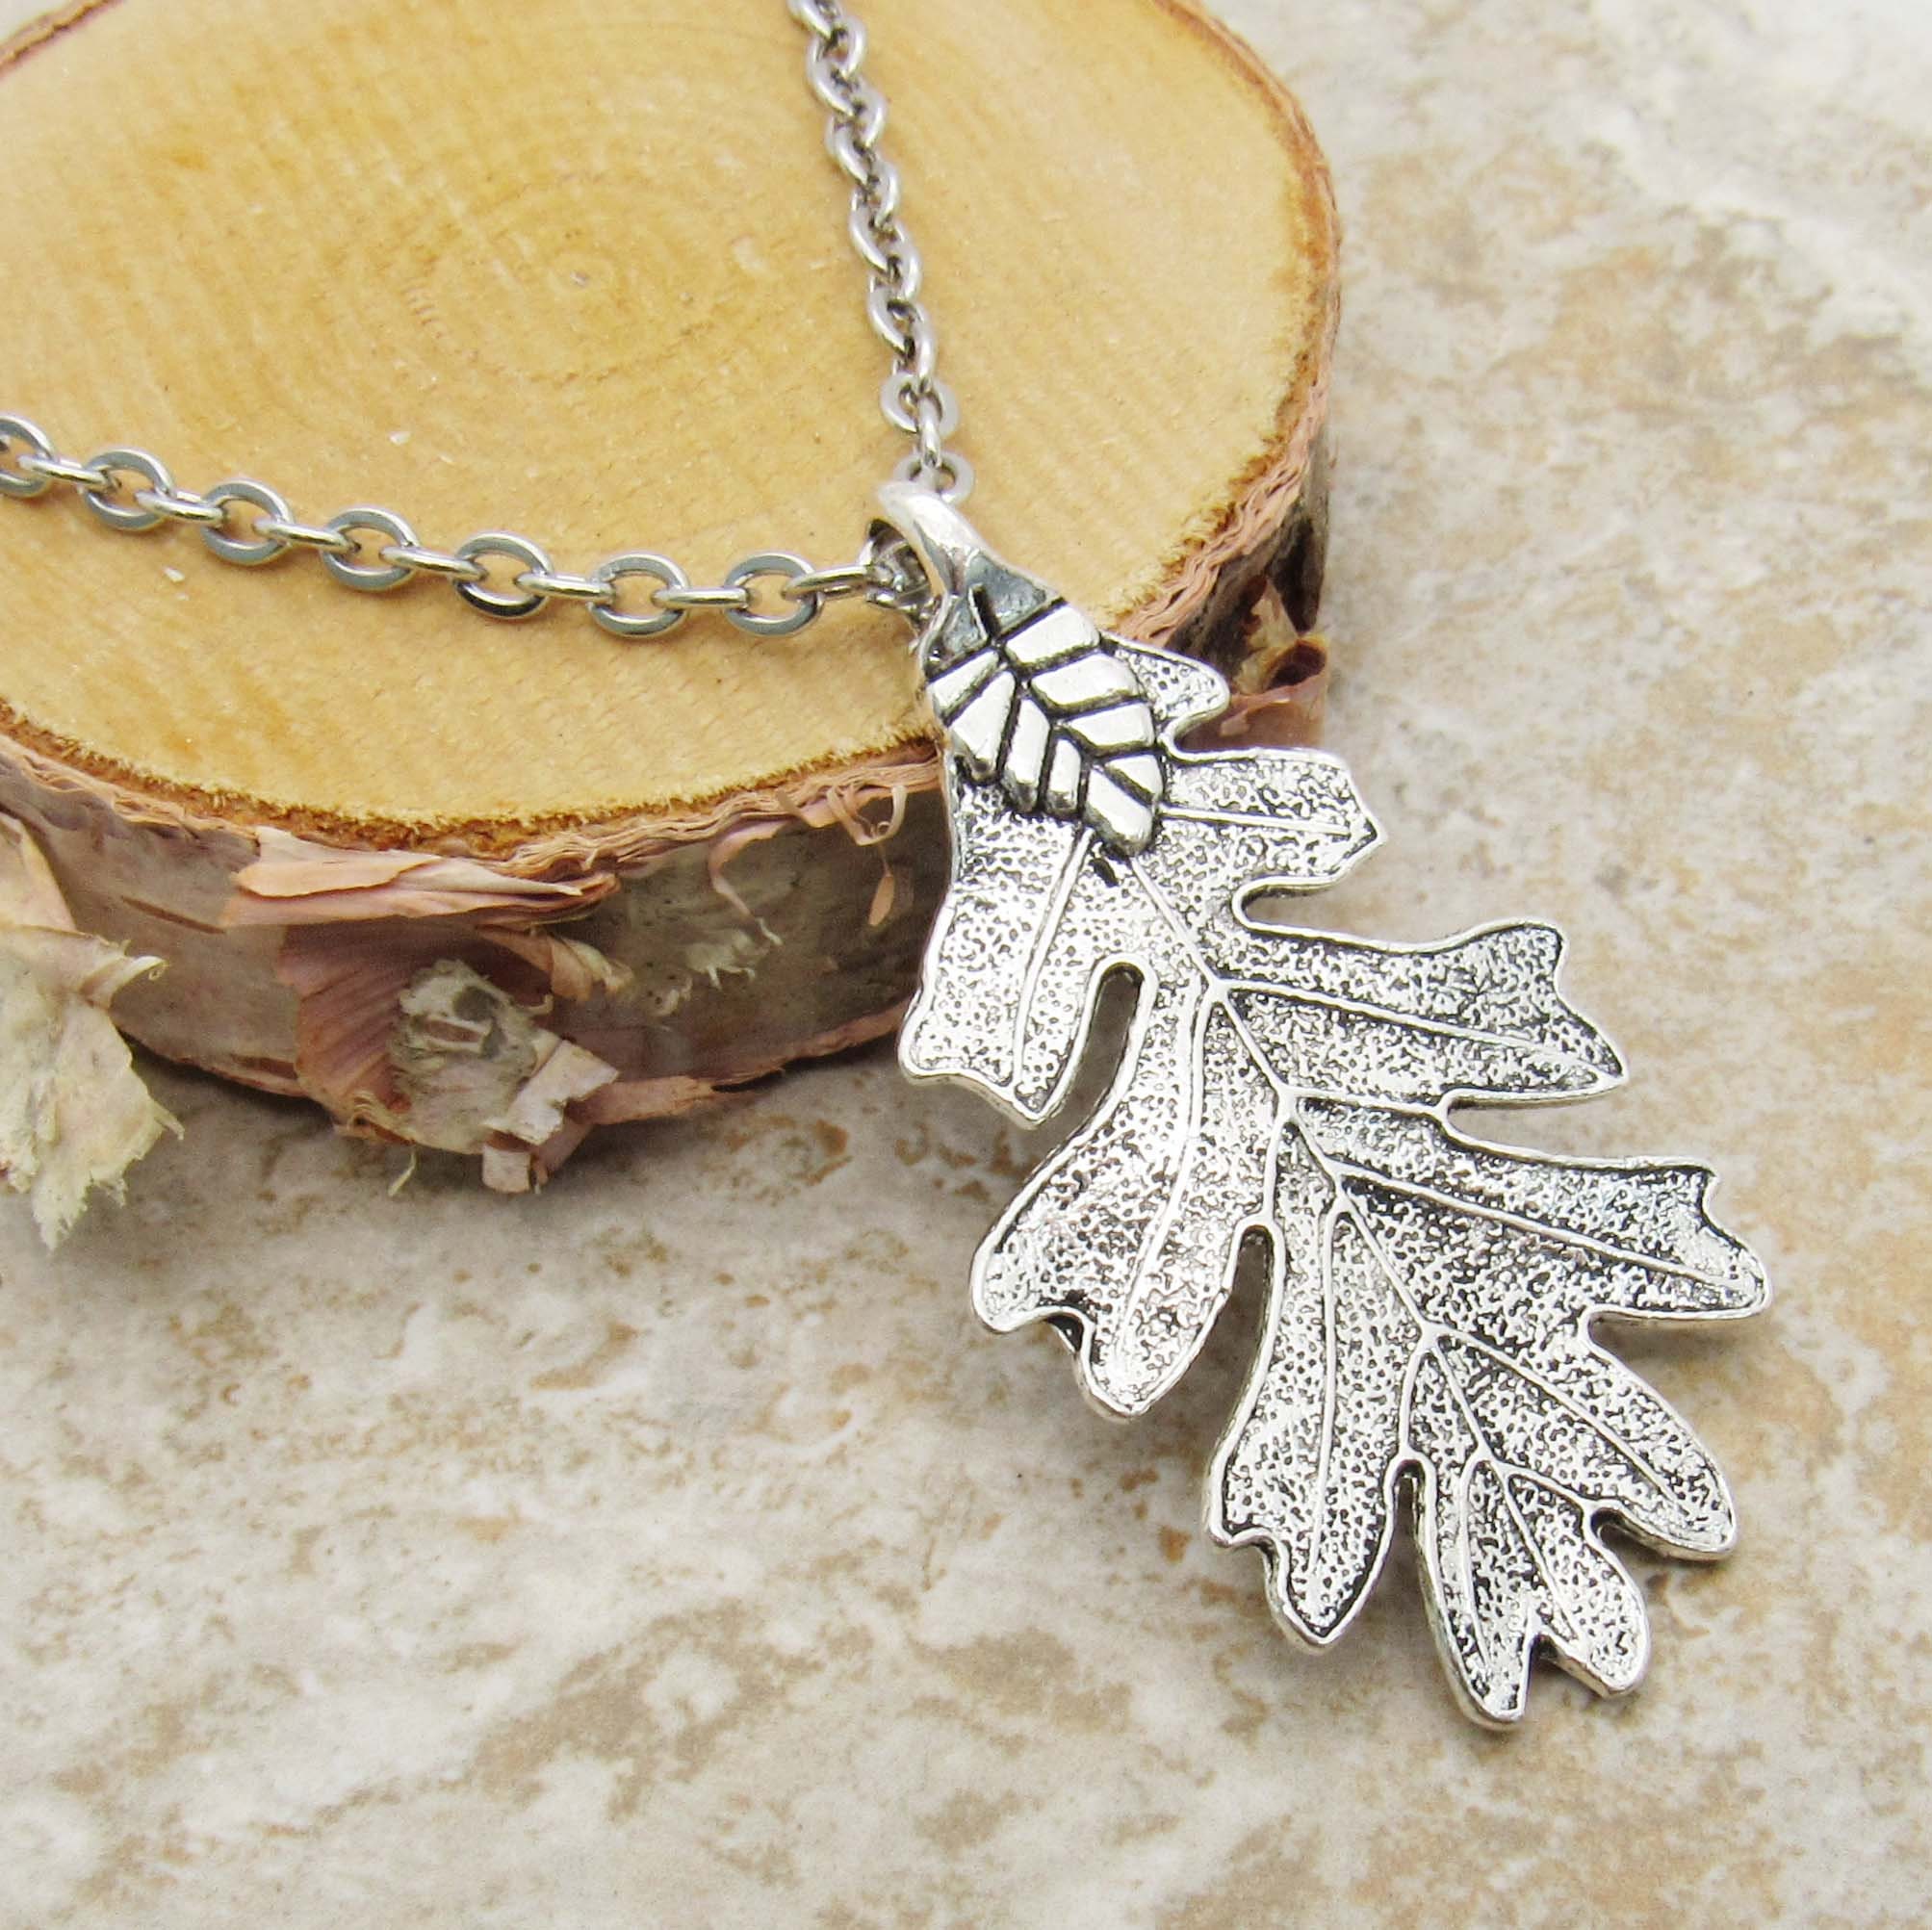 Turn a New Leaf - Leaf charm necklace